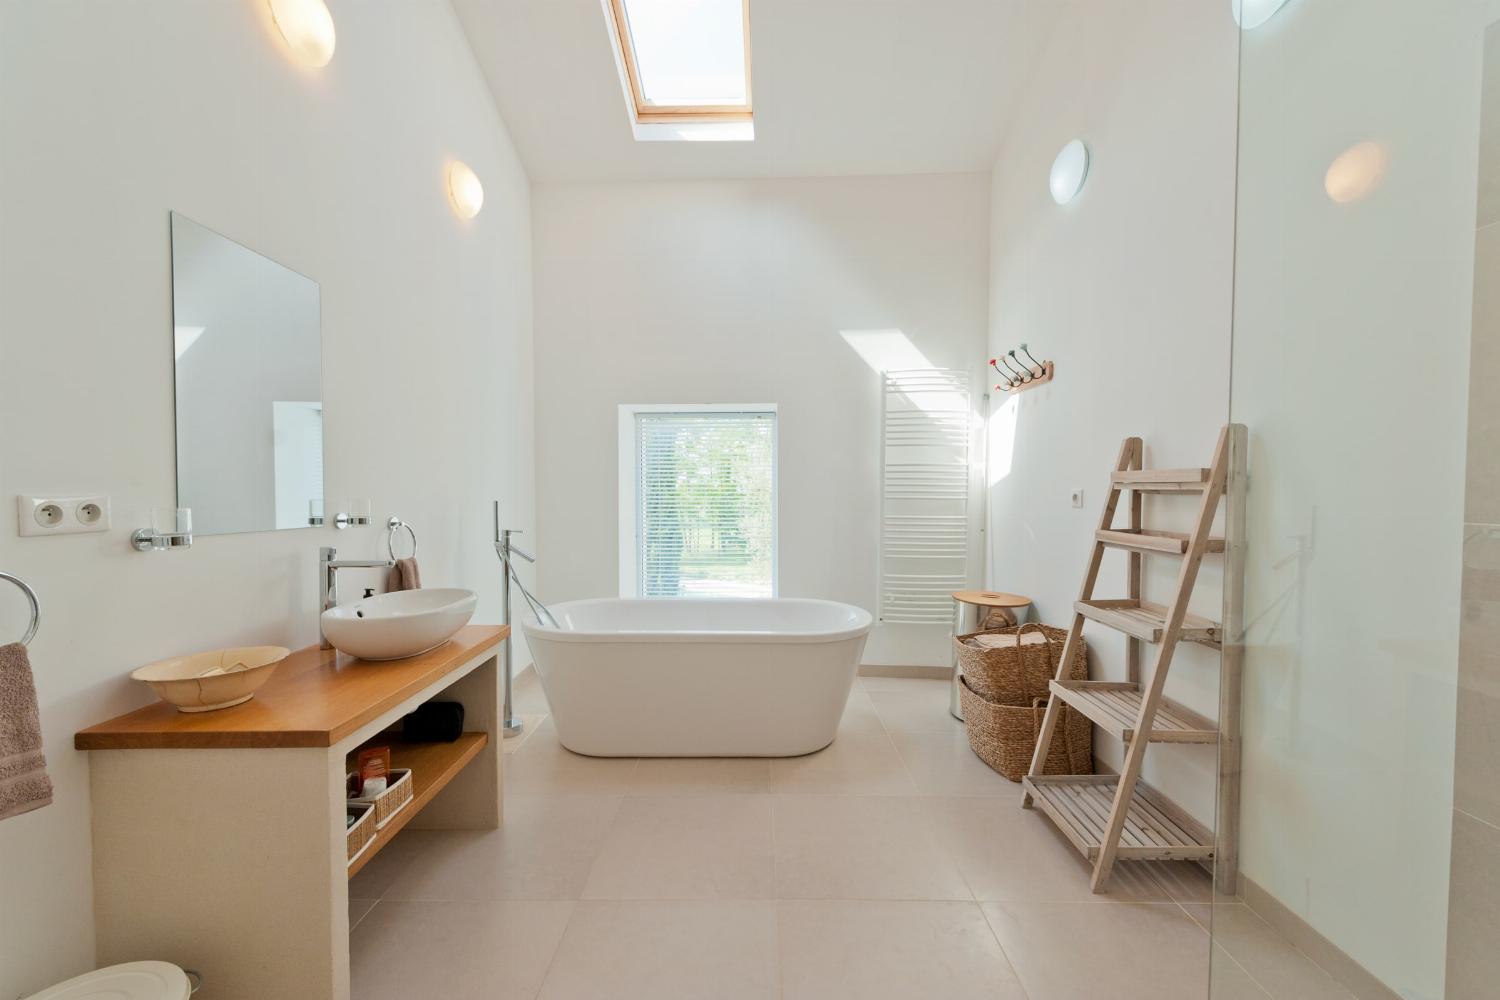 Bathroom | Rental home in the Tarn